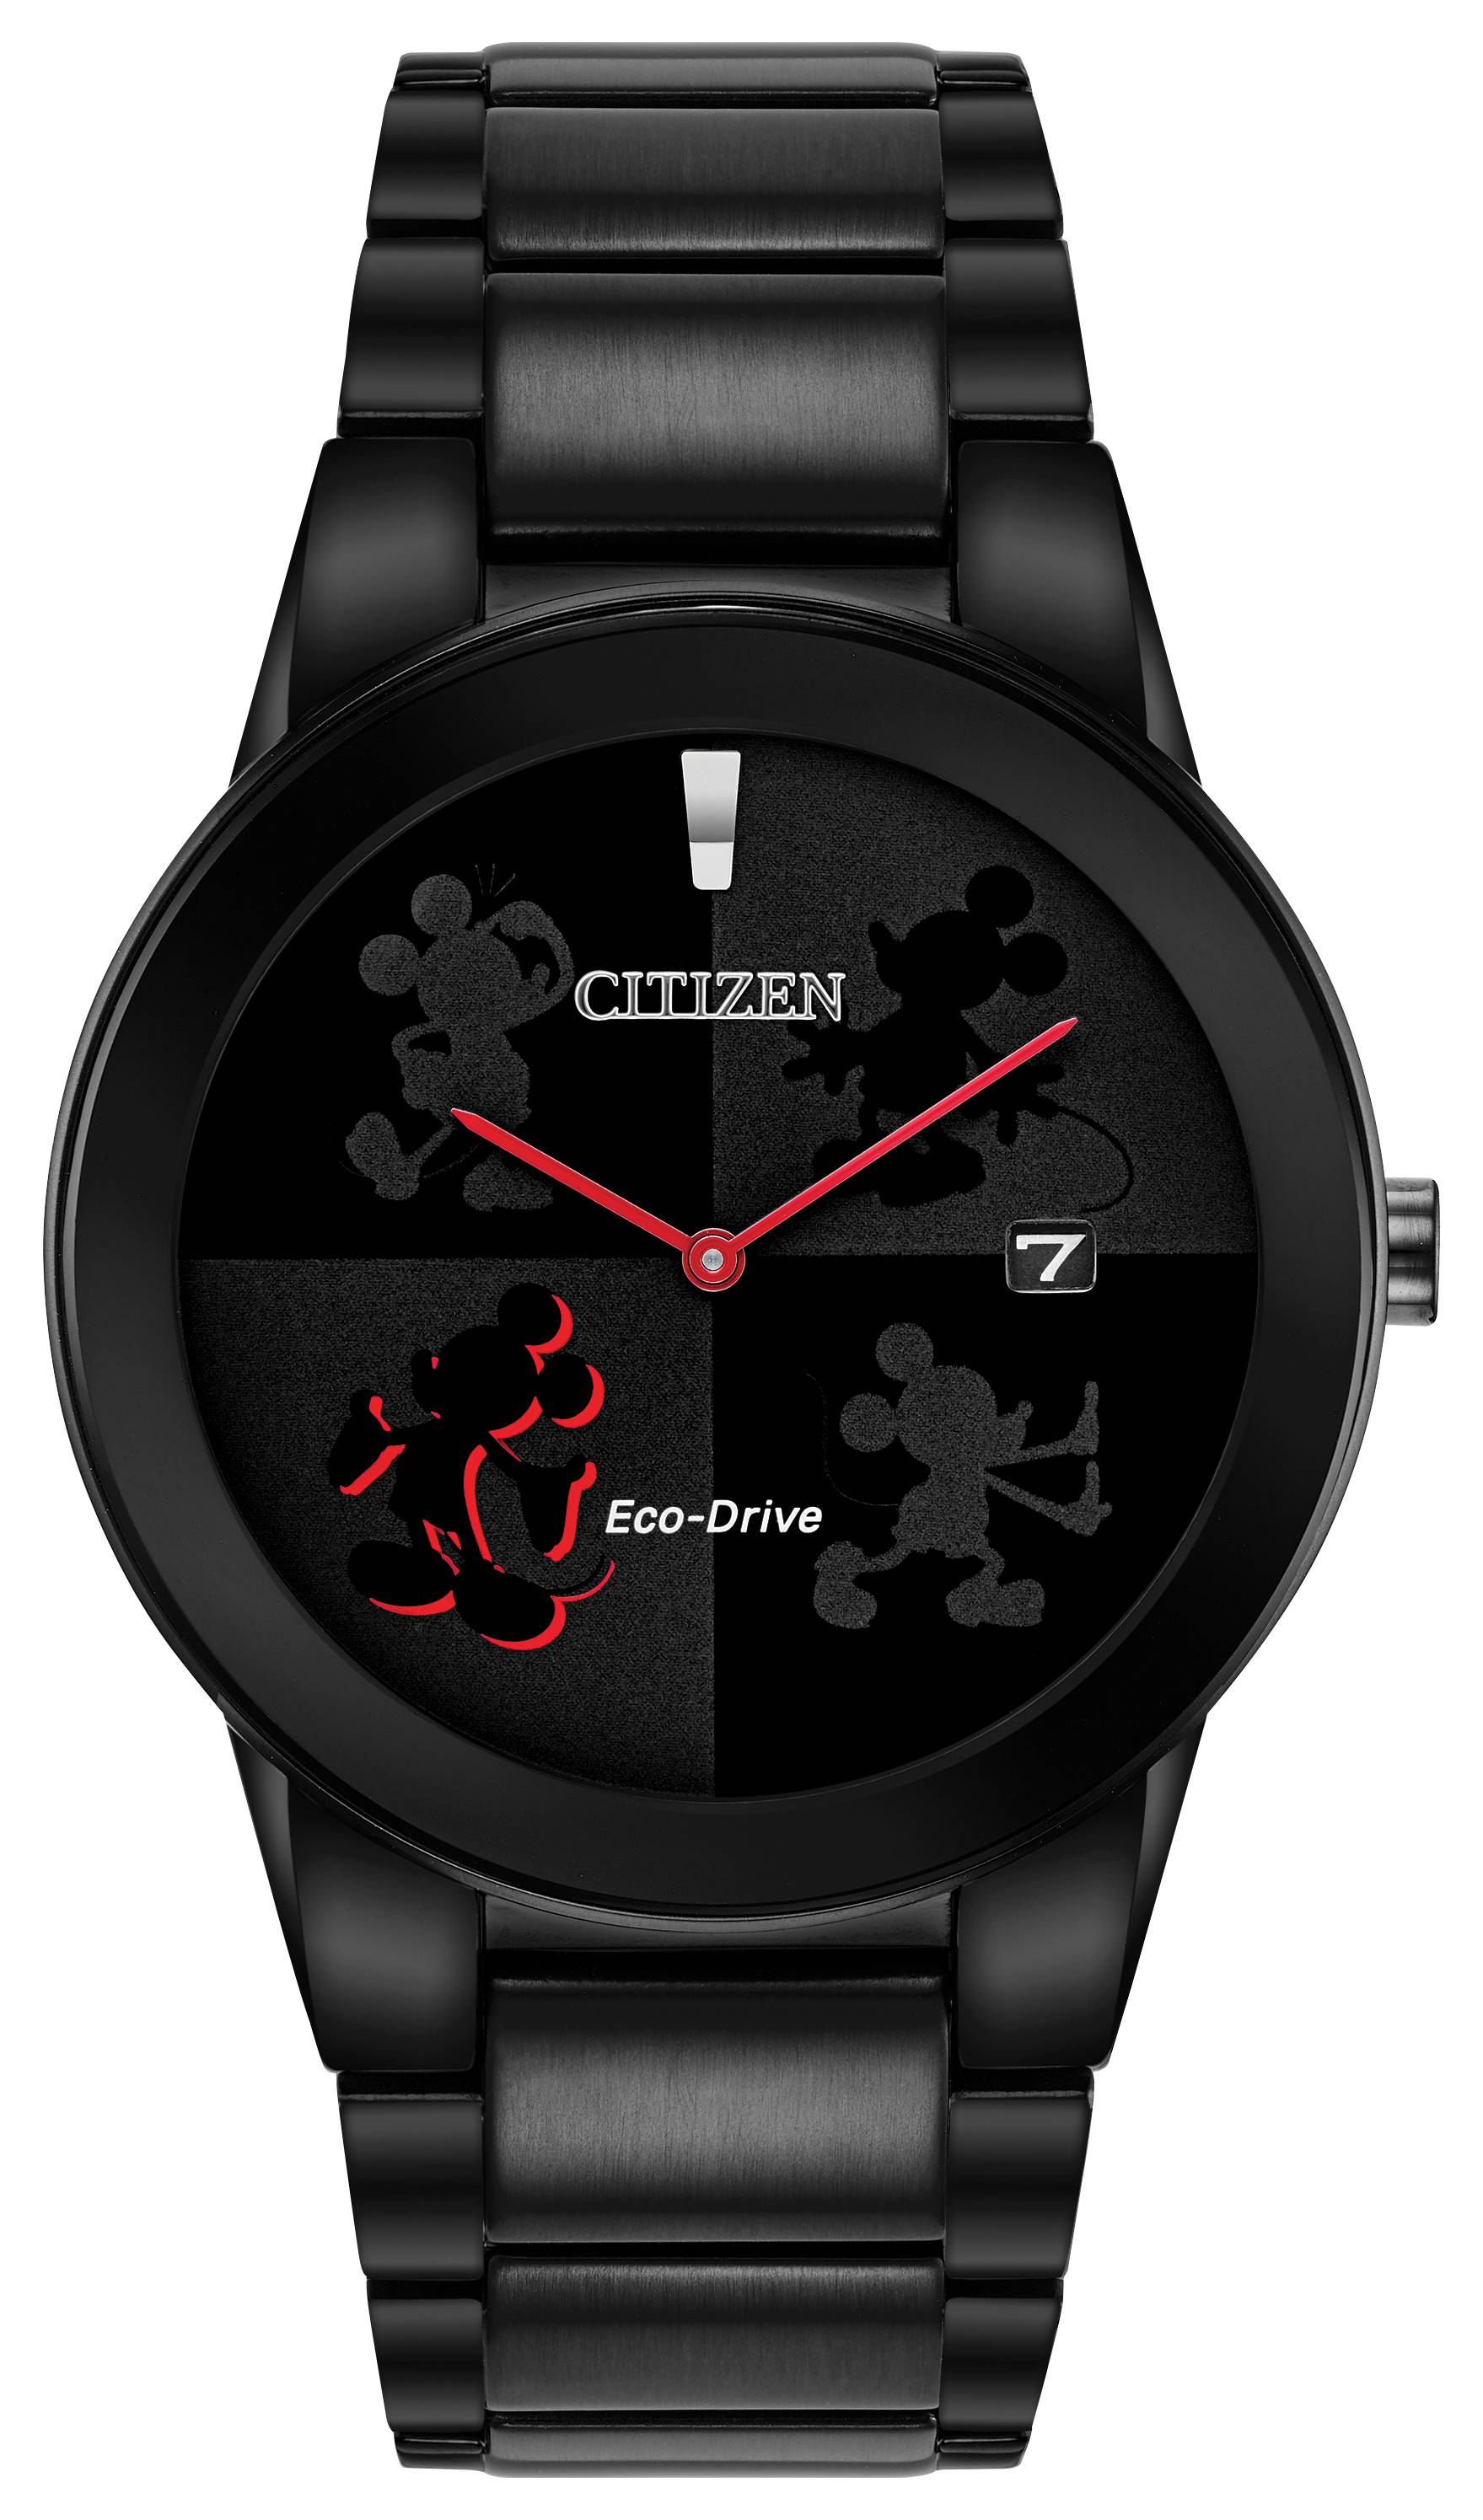 Citizen Mickey timepieces